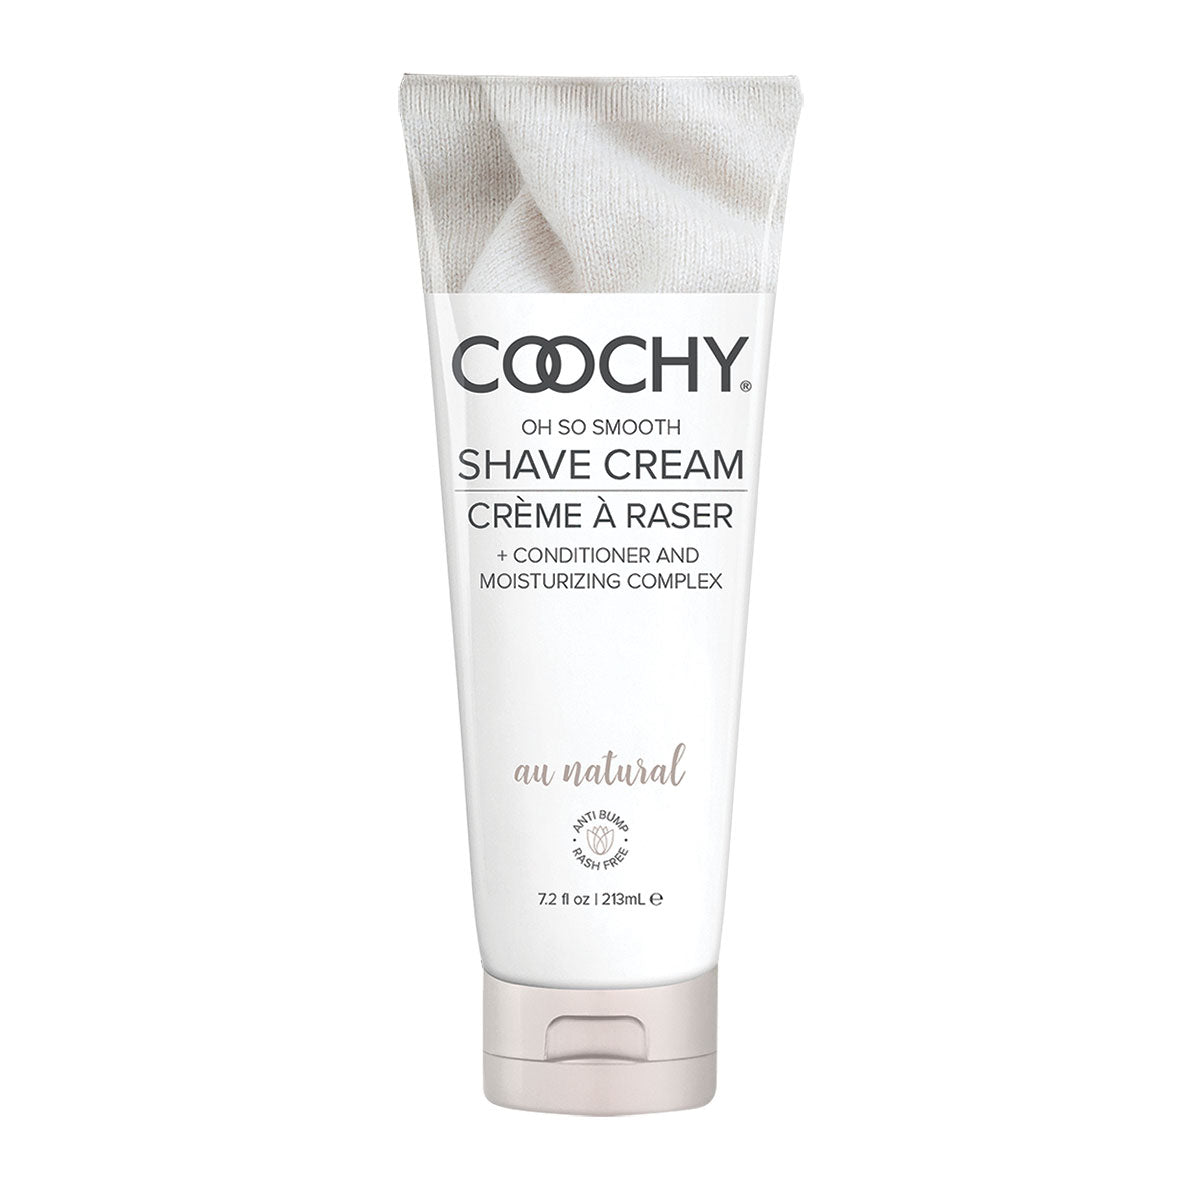 Coochy Shave Cream 7.2oz